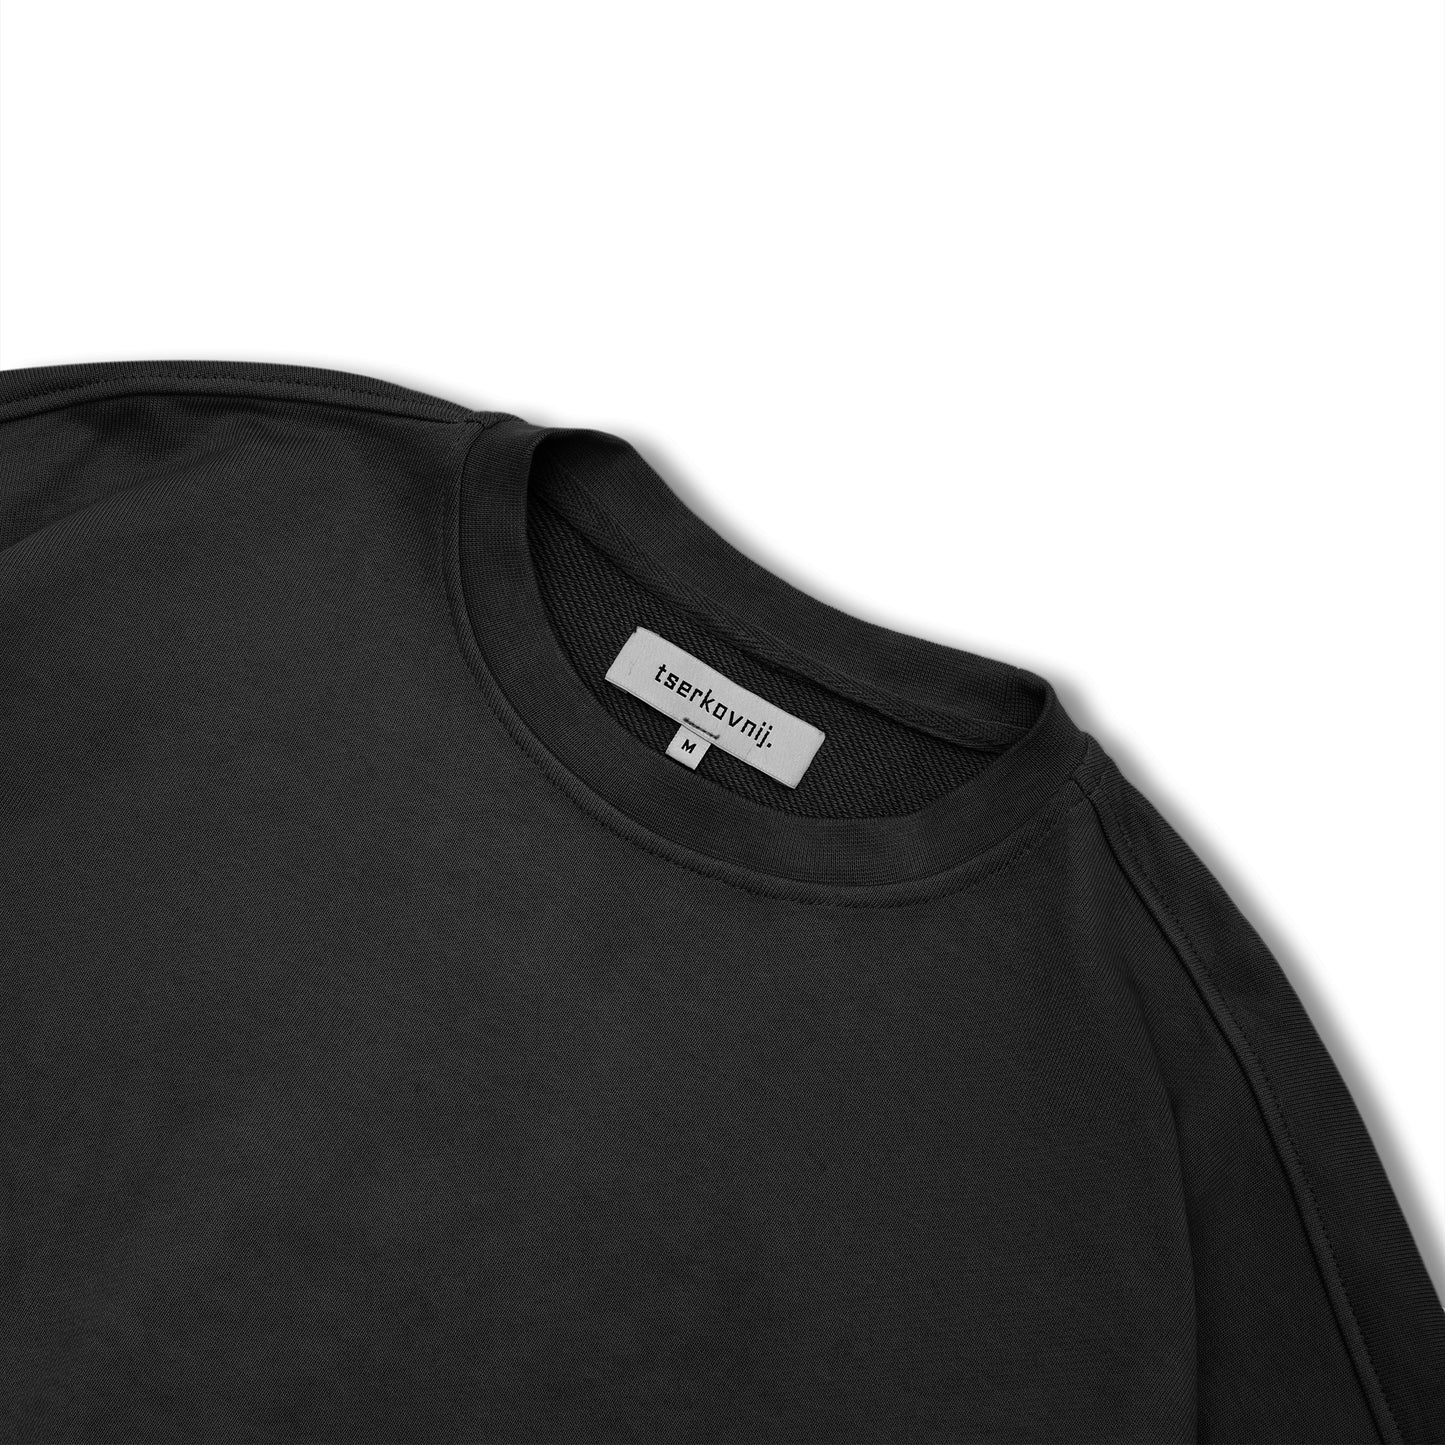 Sweatshirt Box Fit "Black"